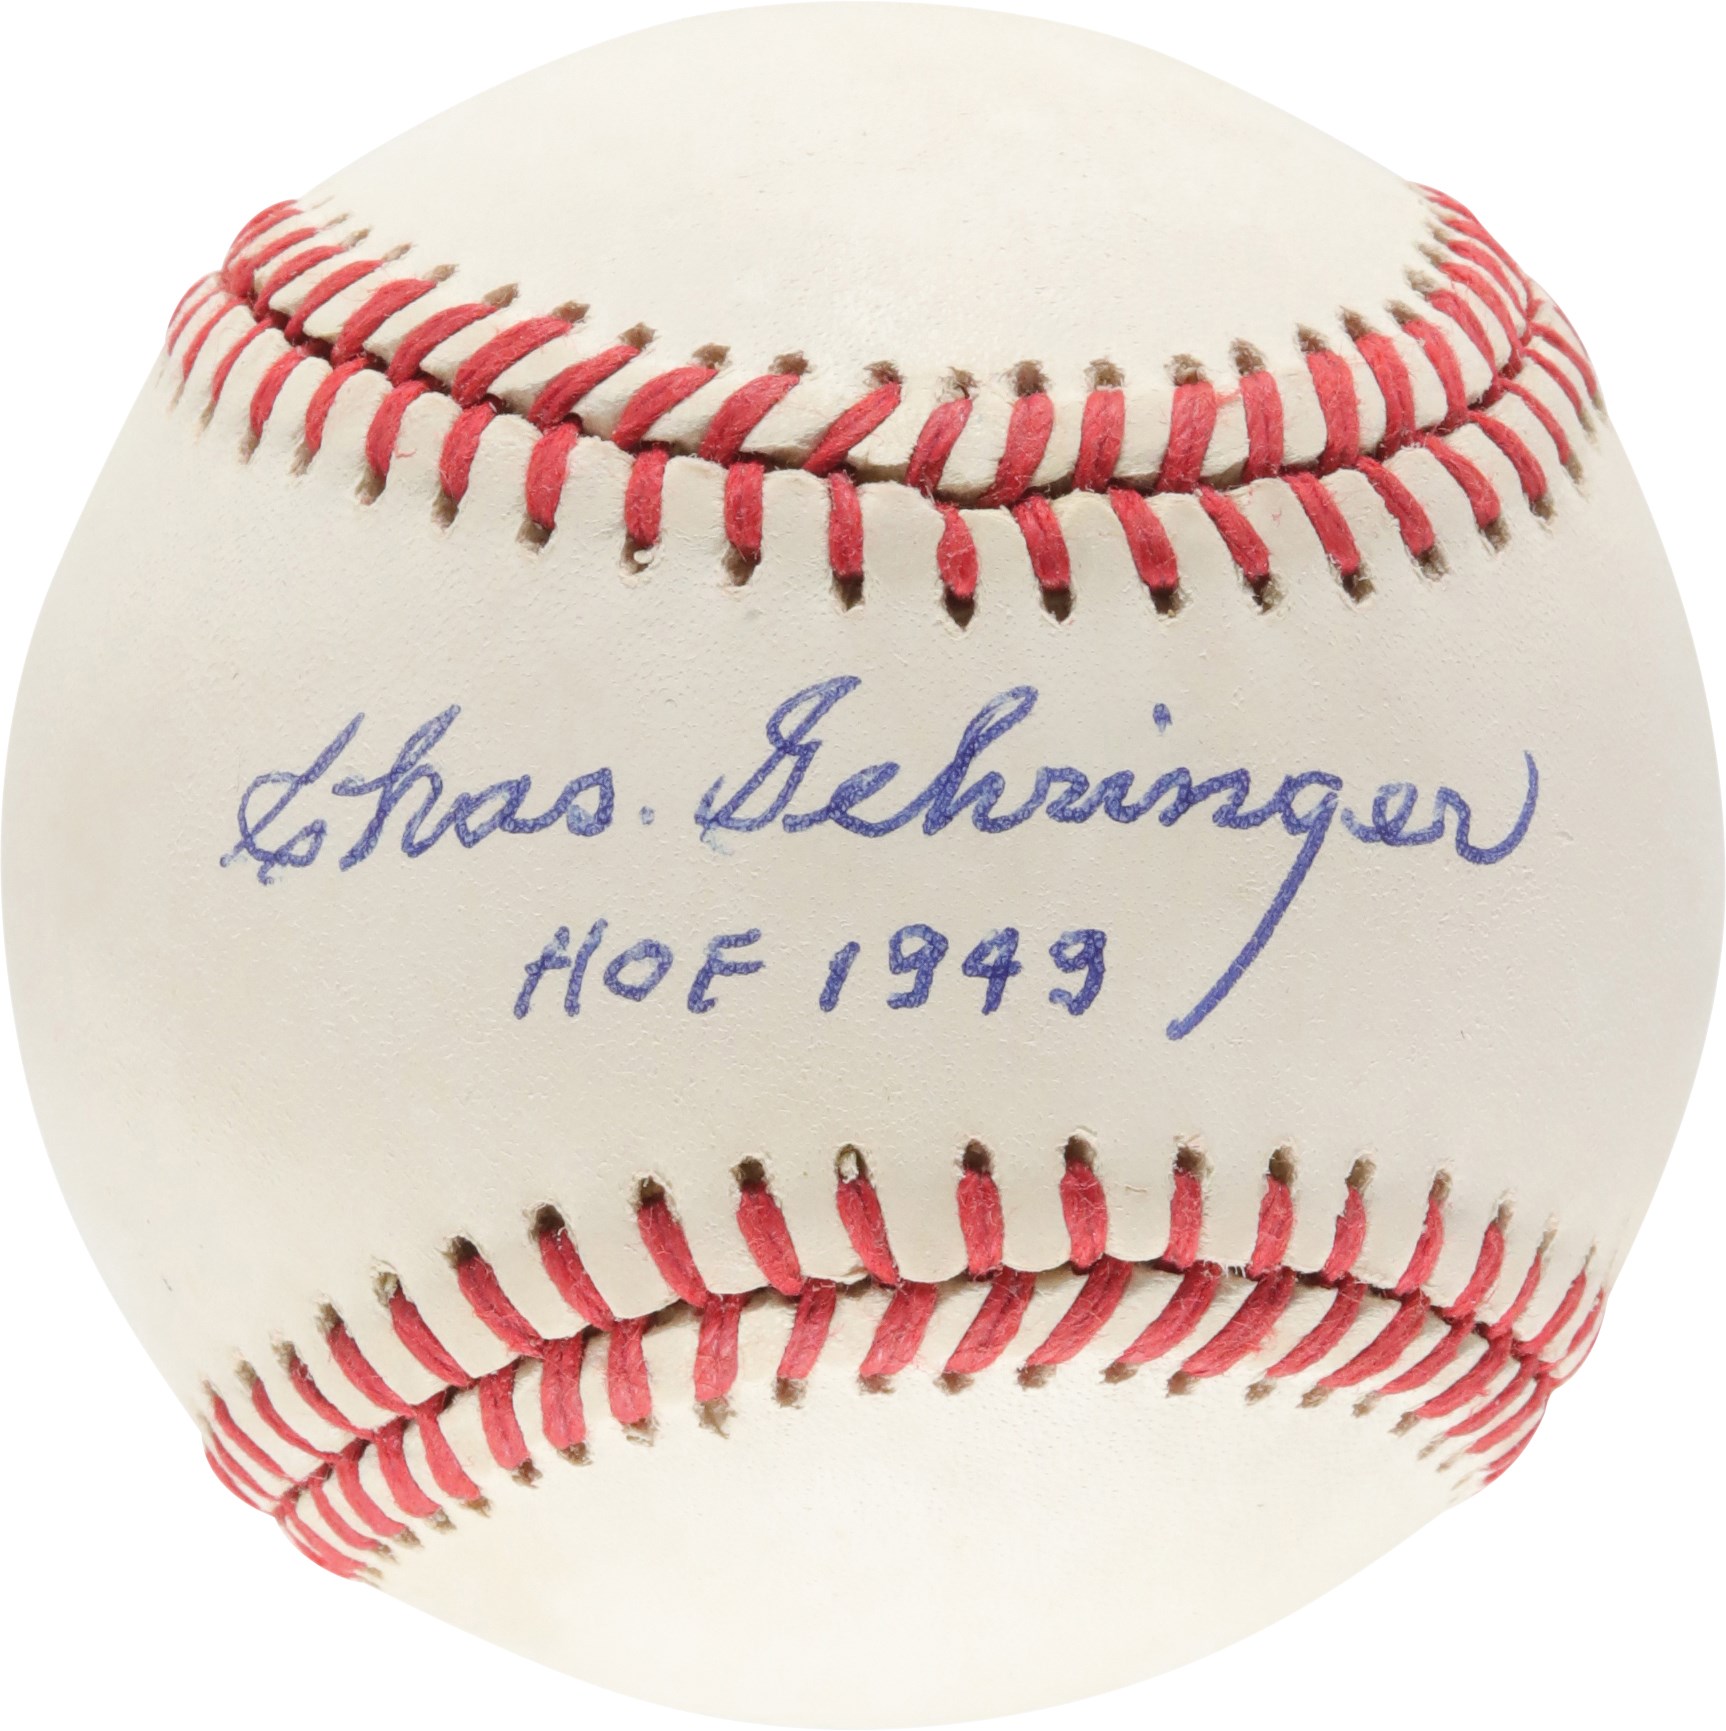 Baseball Autographs - Charlie Gehringer "HOF 1949" Single Signed Baseball (PSA MINT 9 Auto)